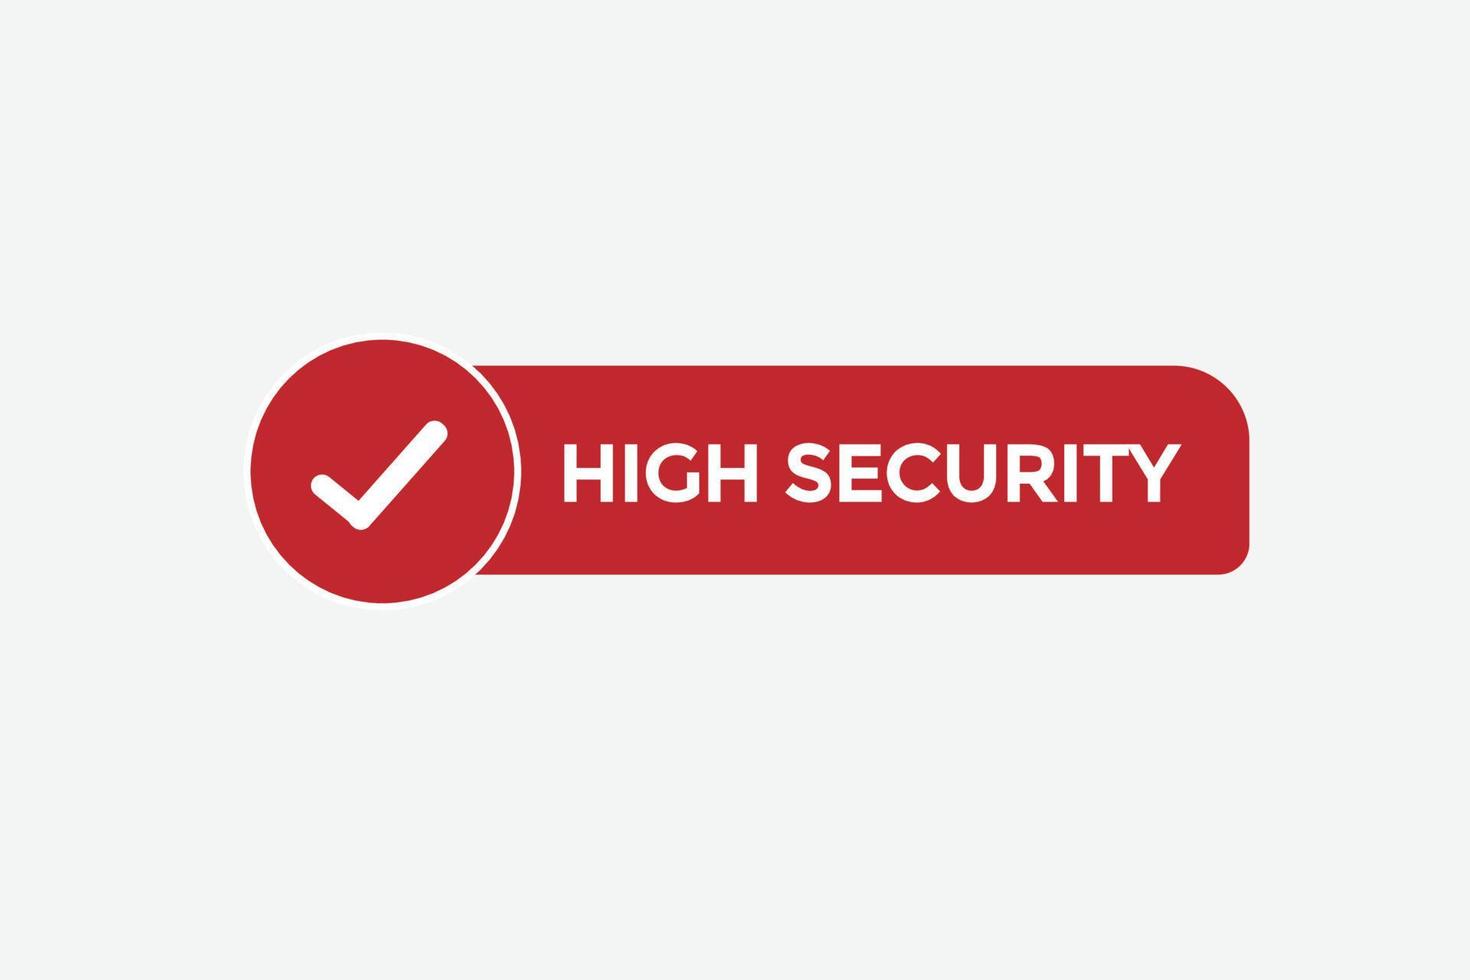 high security vectors.sign label bubble speech high security vector